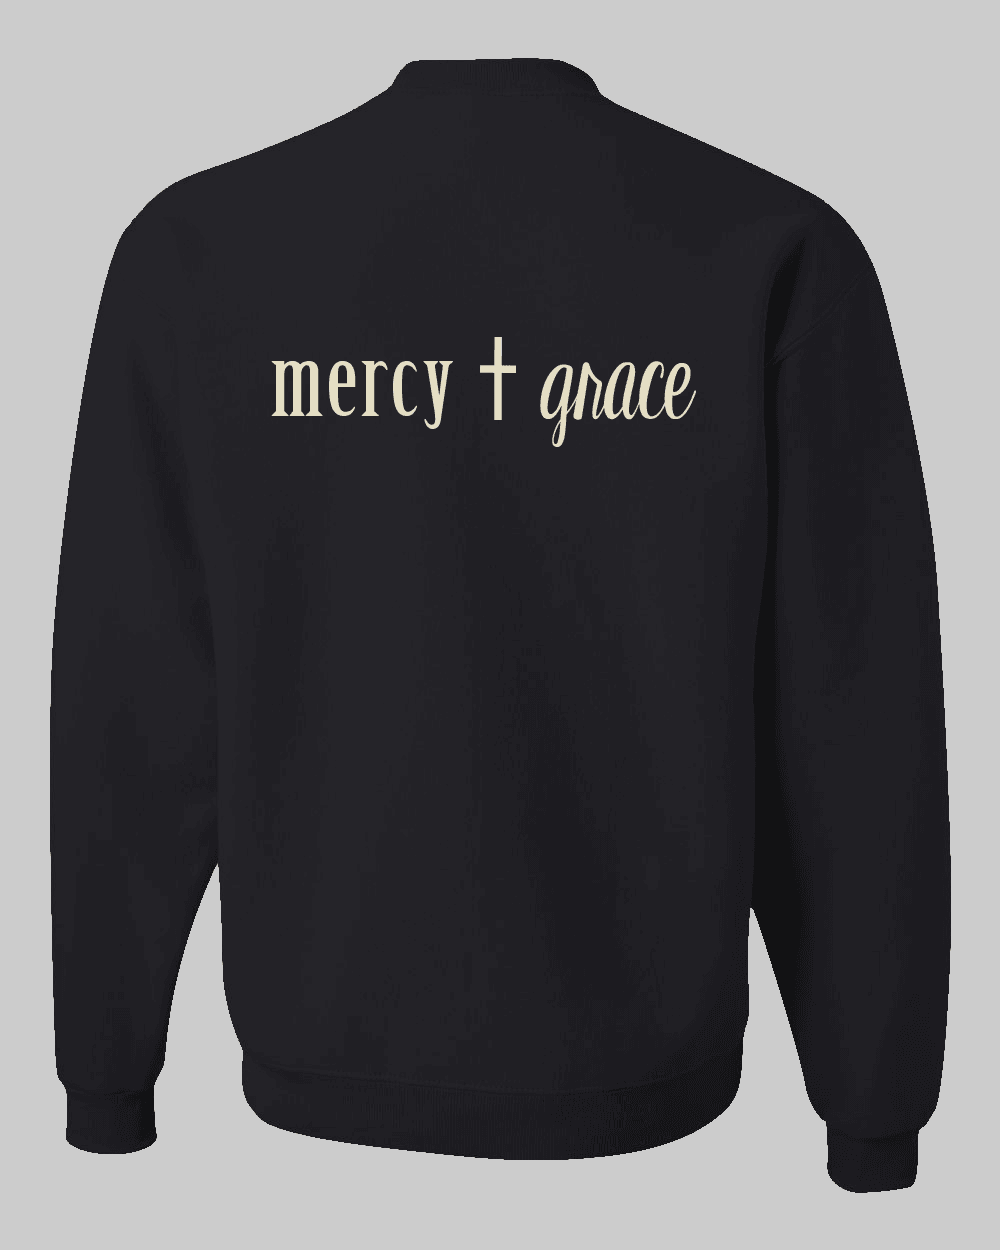 Pray More Worry Less Unisex Black Fleece Sweatshirt - Mercy Plus Grace